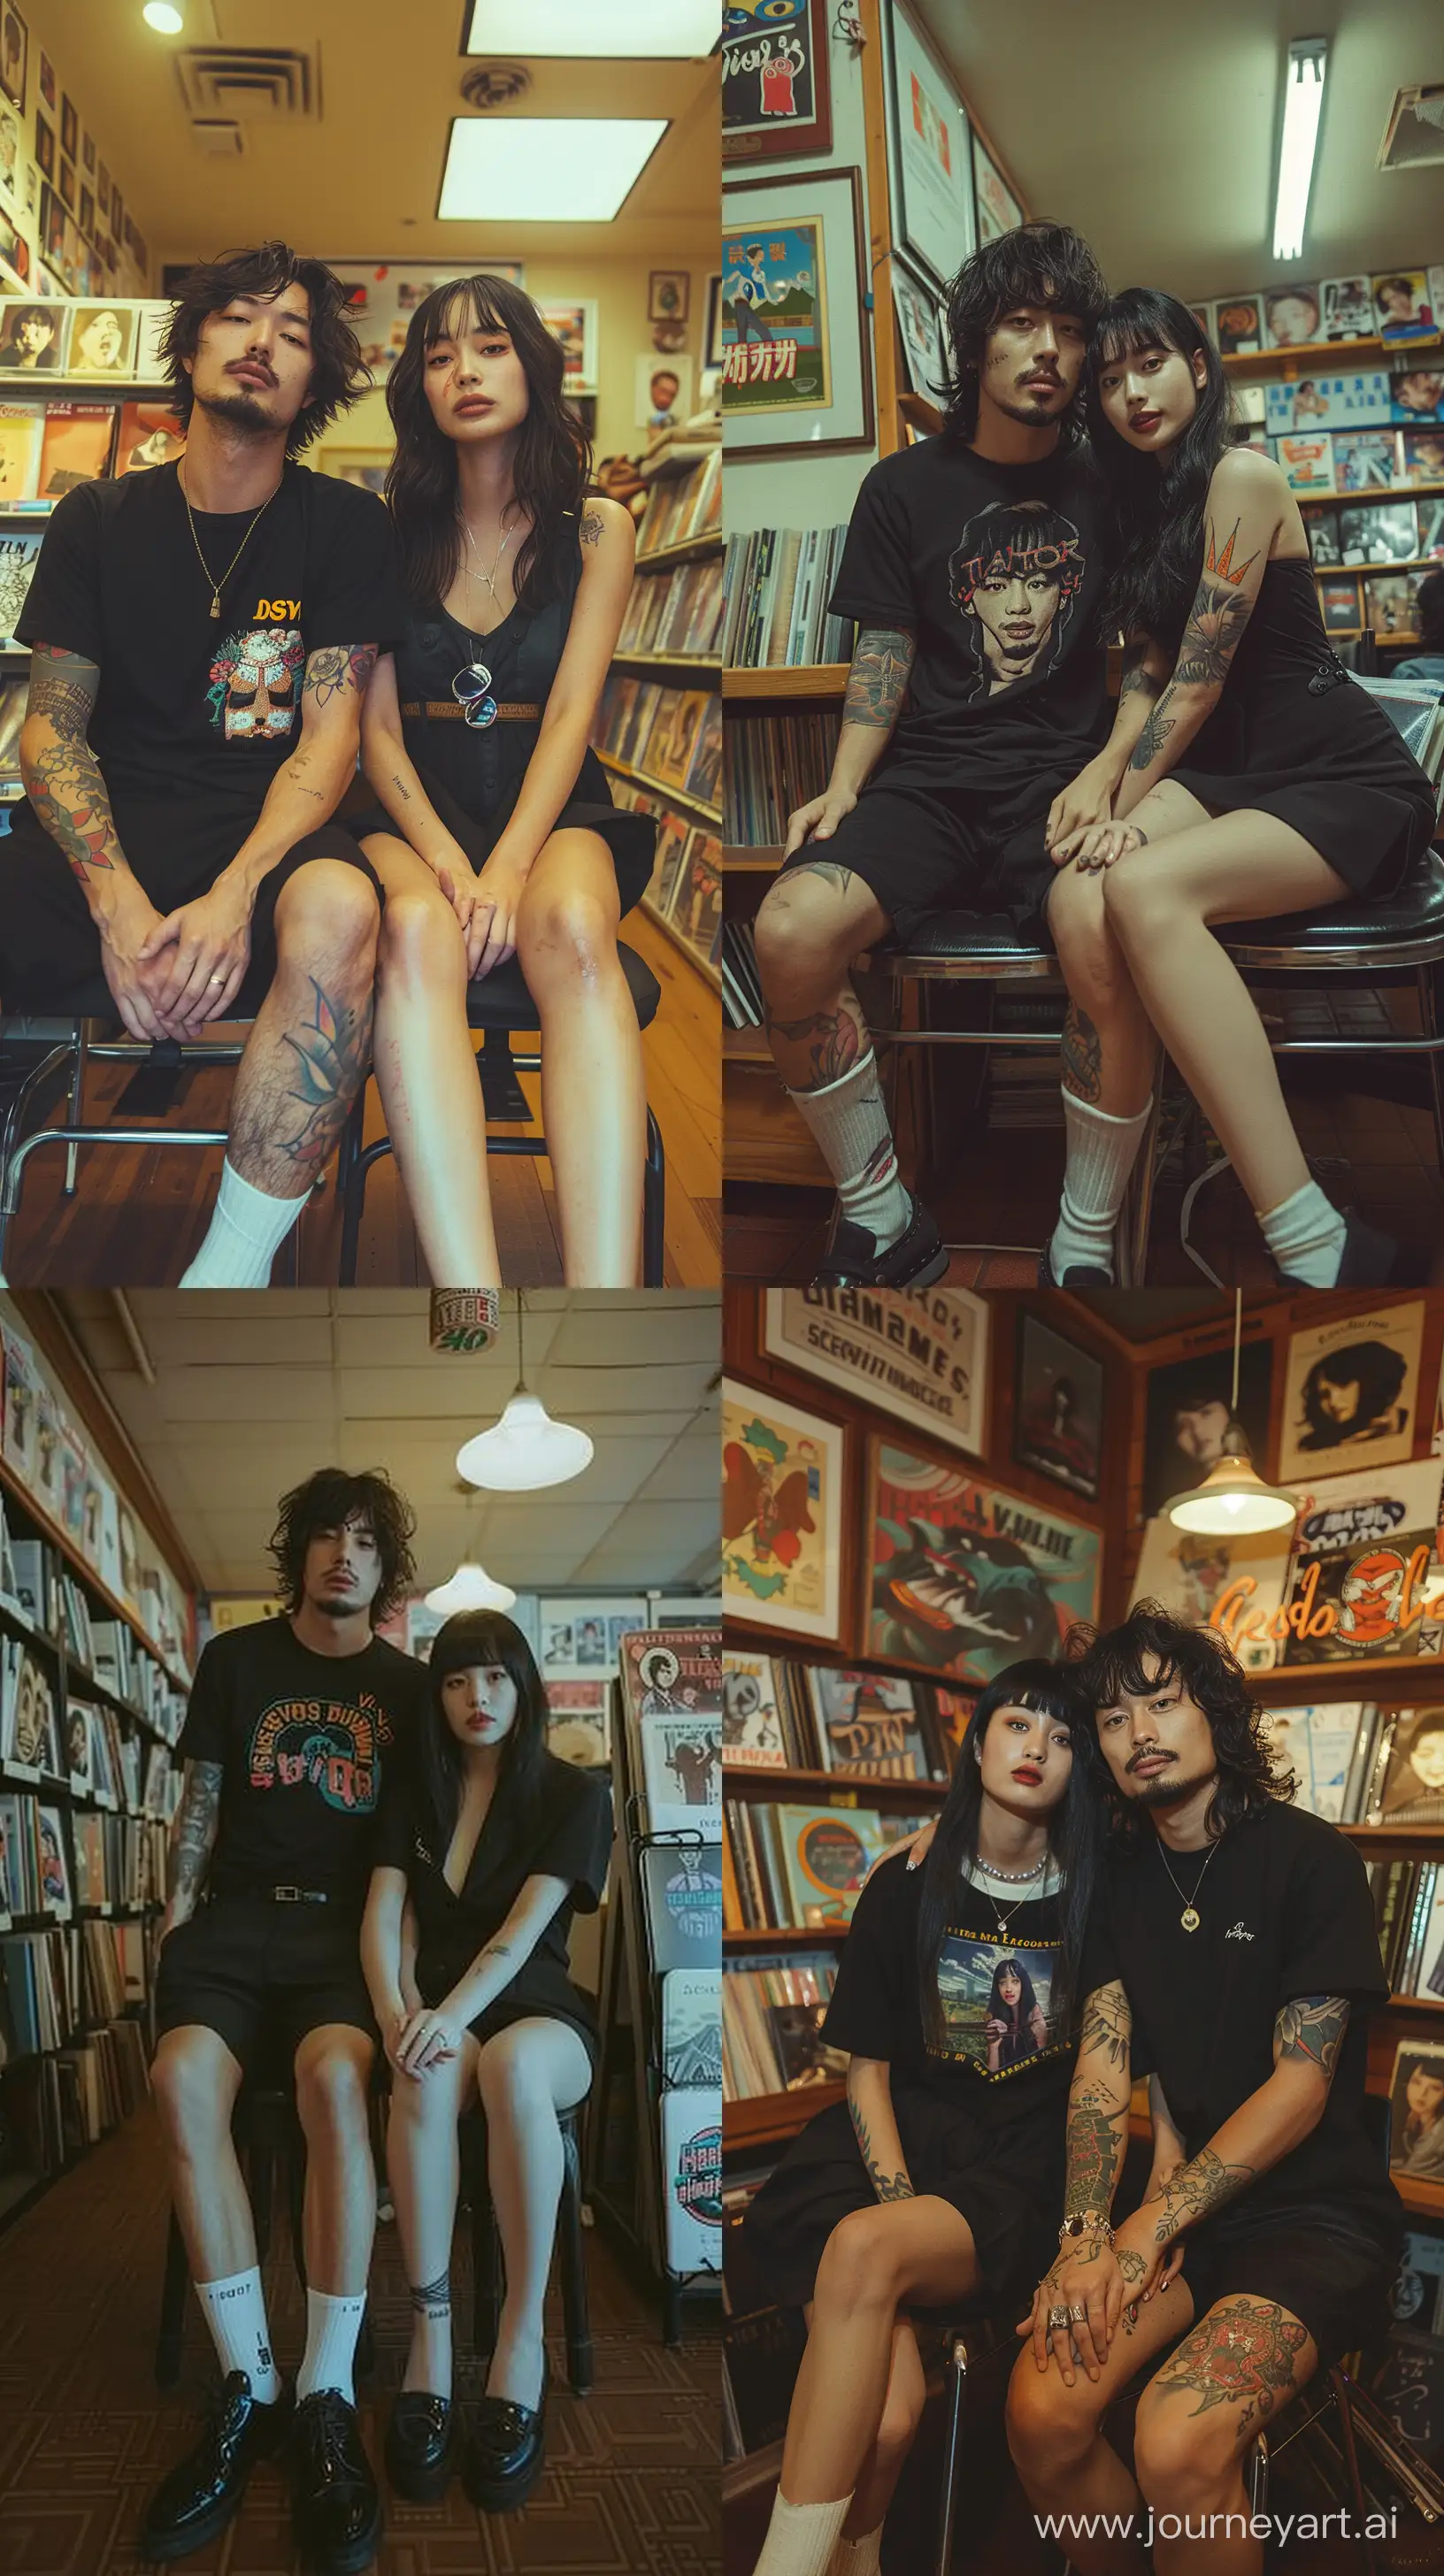 Stylish-Asian-Couple-in-Black-Attire-Enjoying-Time-at-Album-Store